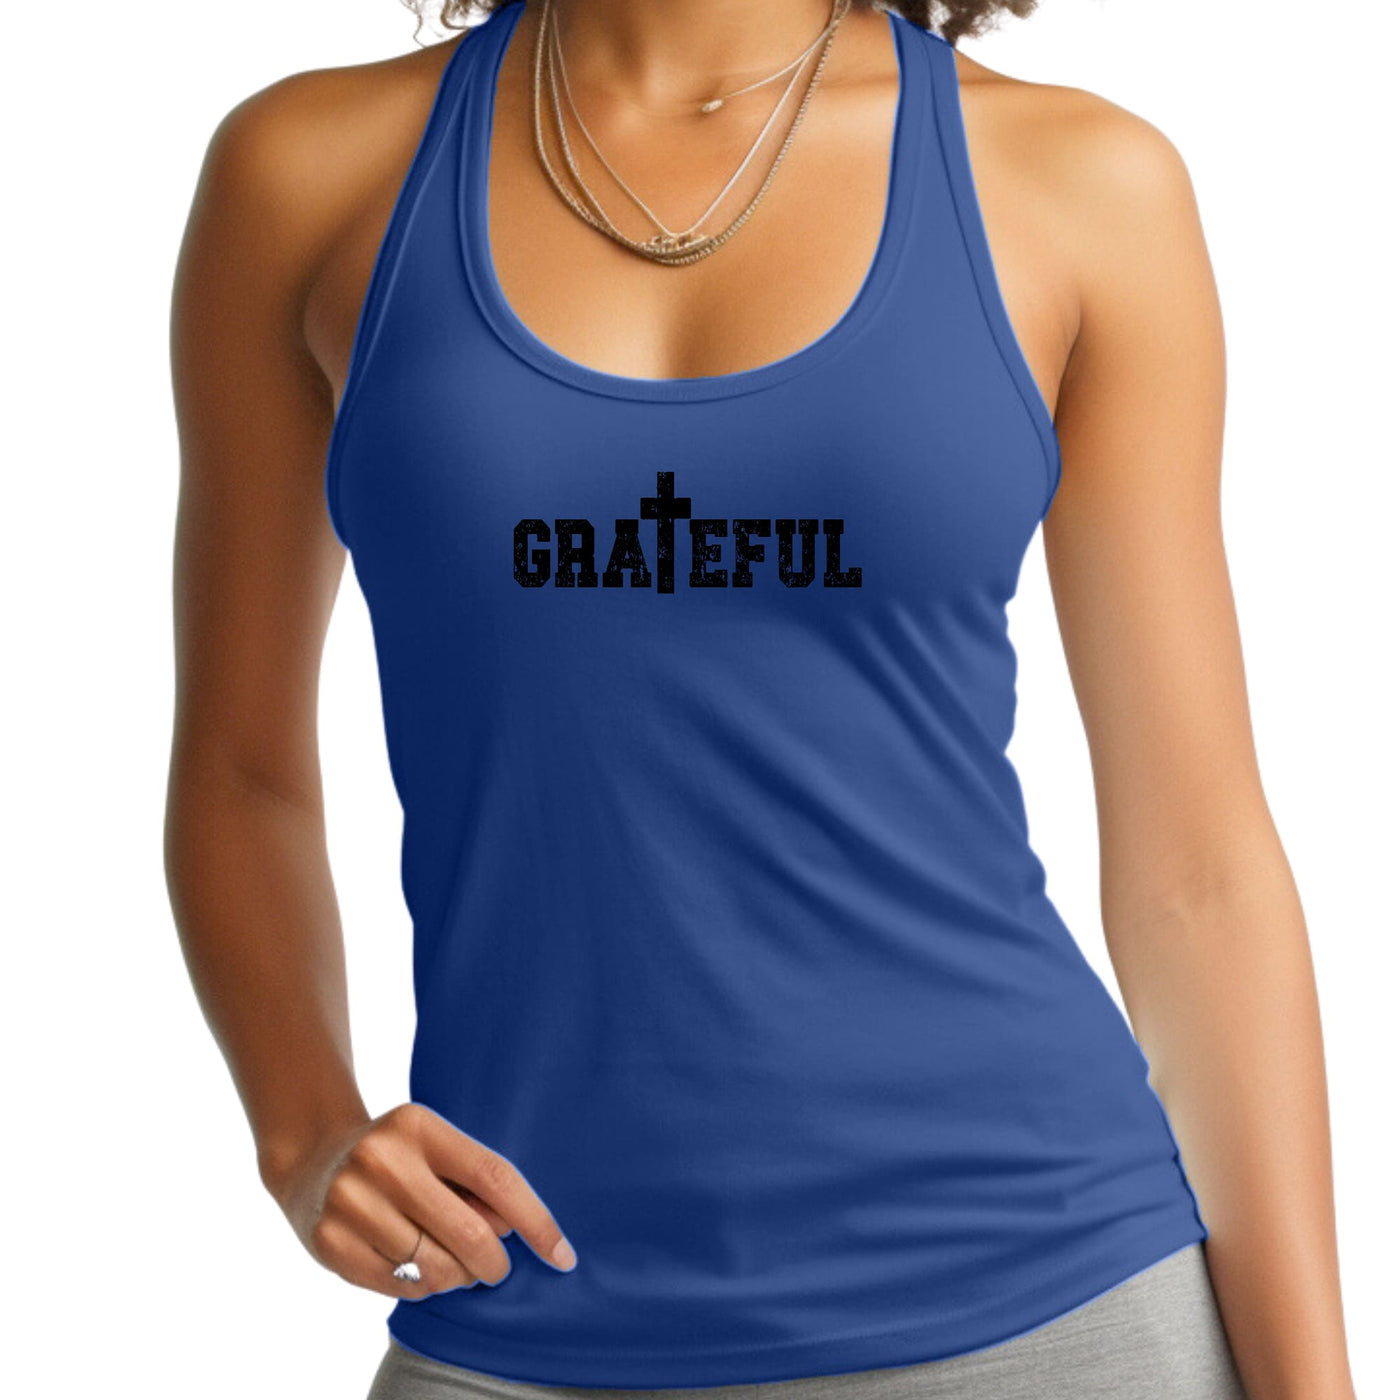 Womens Tank Top Fitness T - shirt Grateful Print - Tops